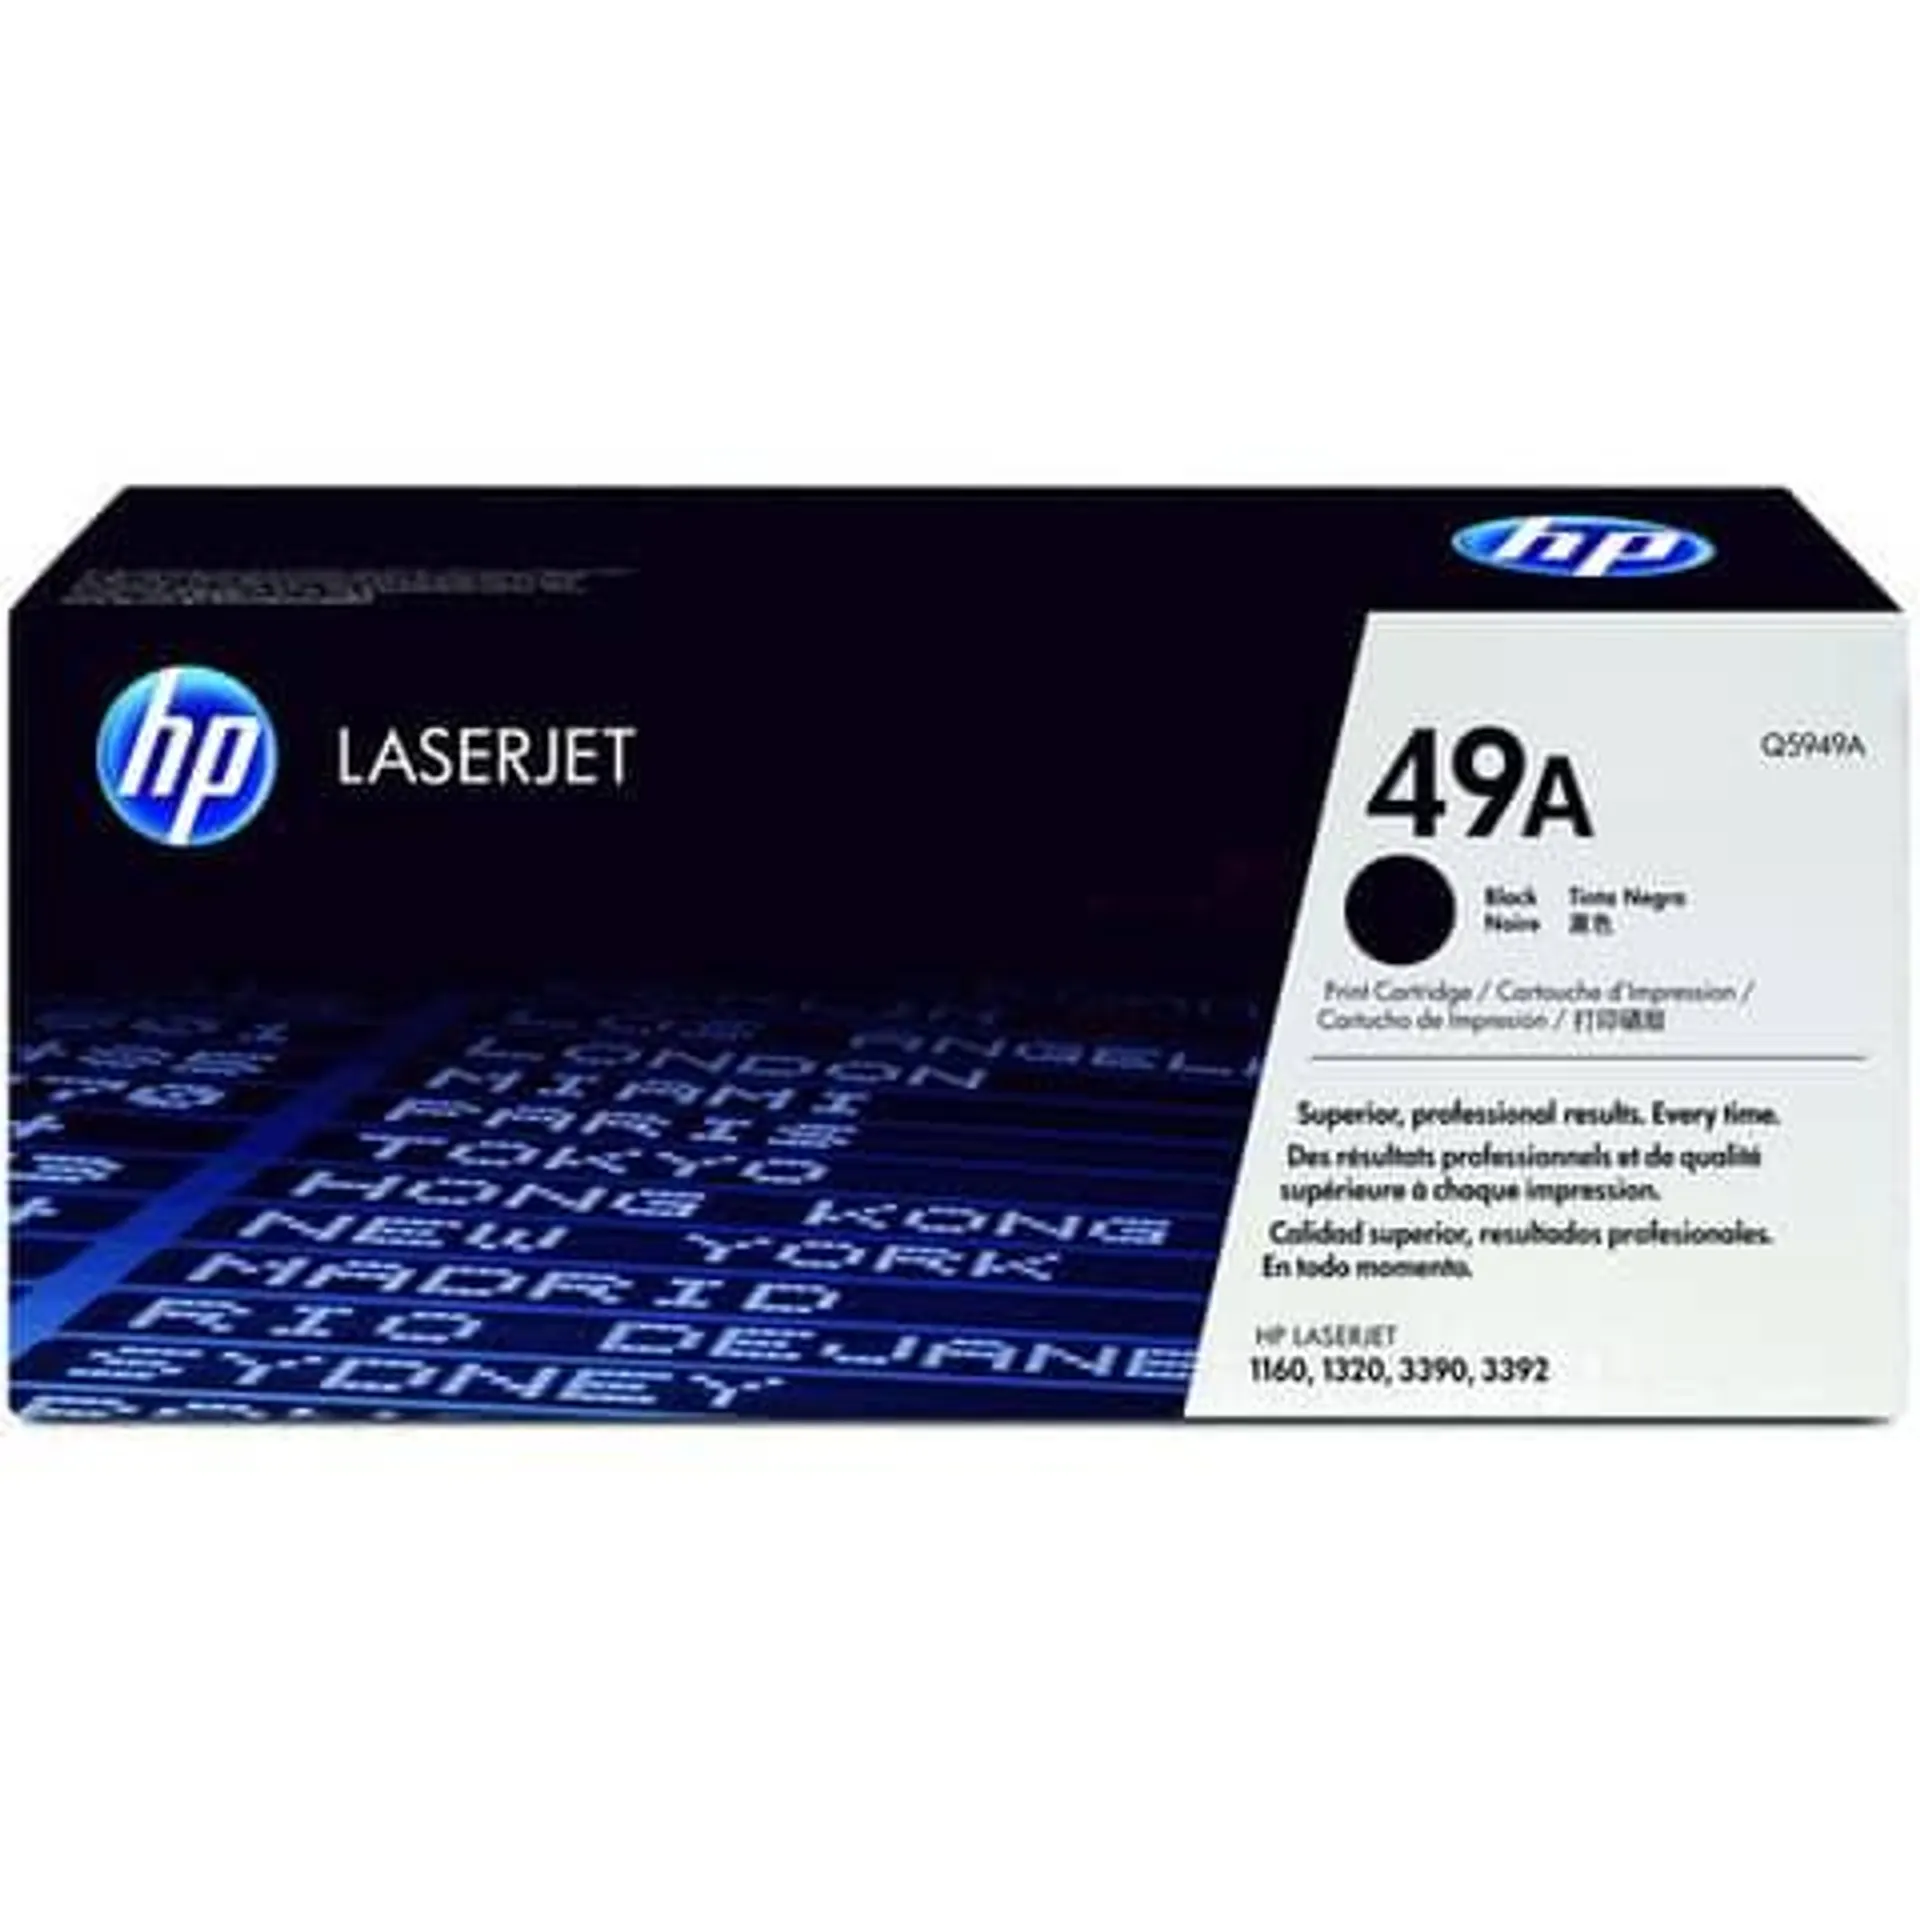 Lasertoner Nr. 49A schwarz HP Q5949A